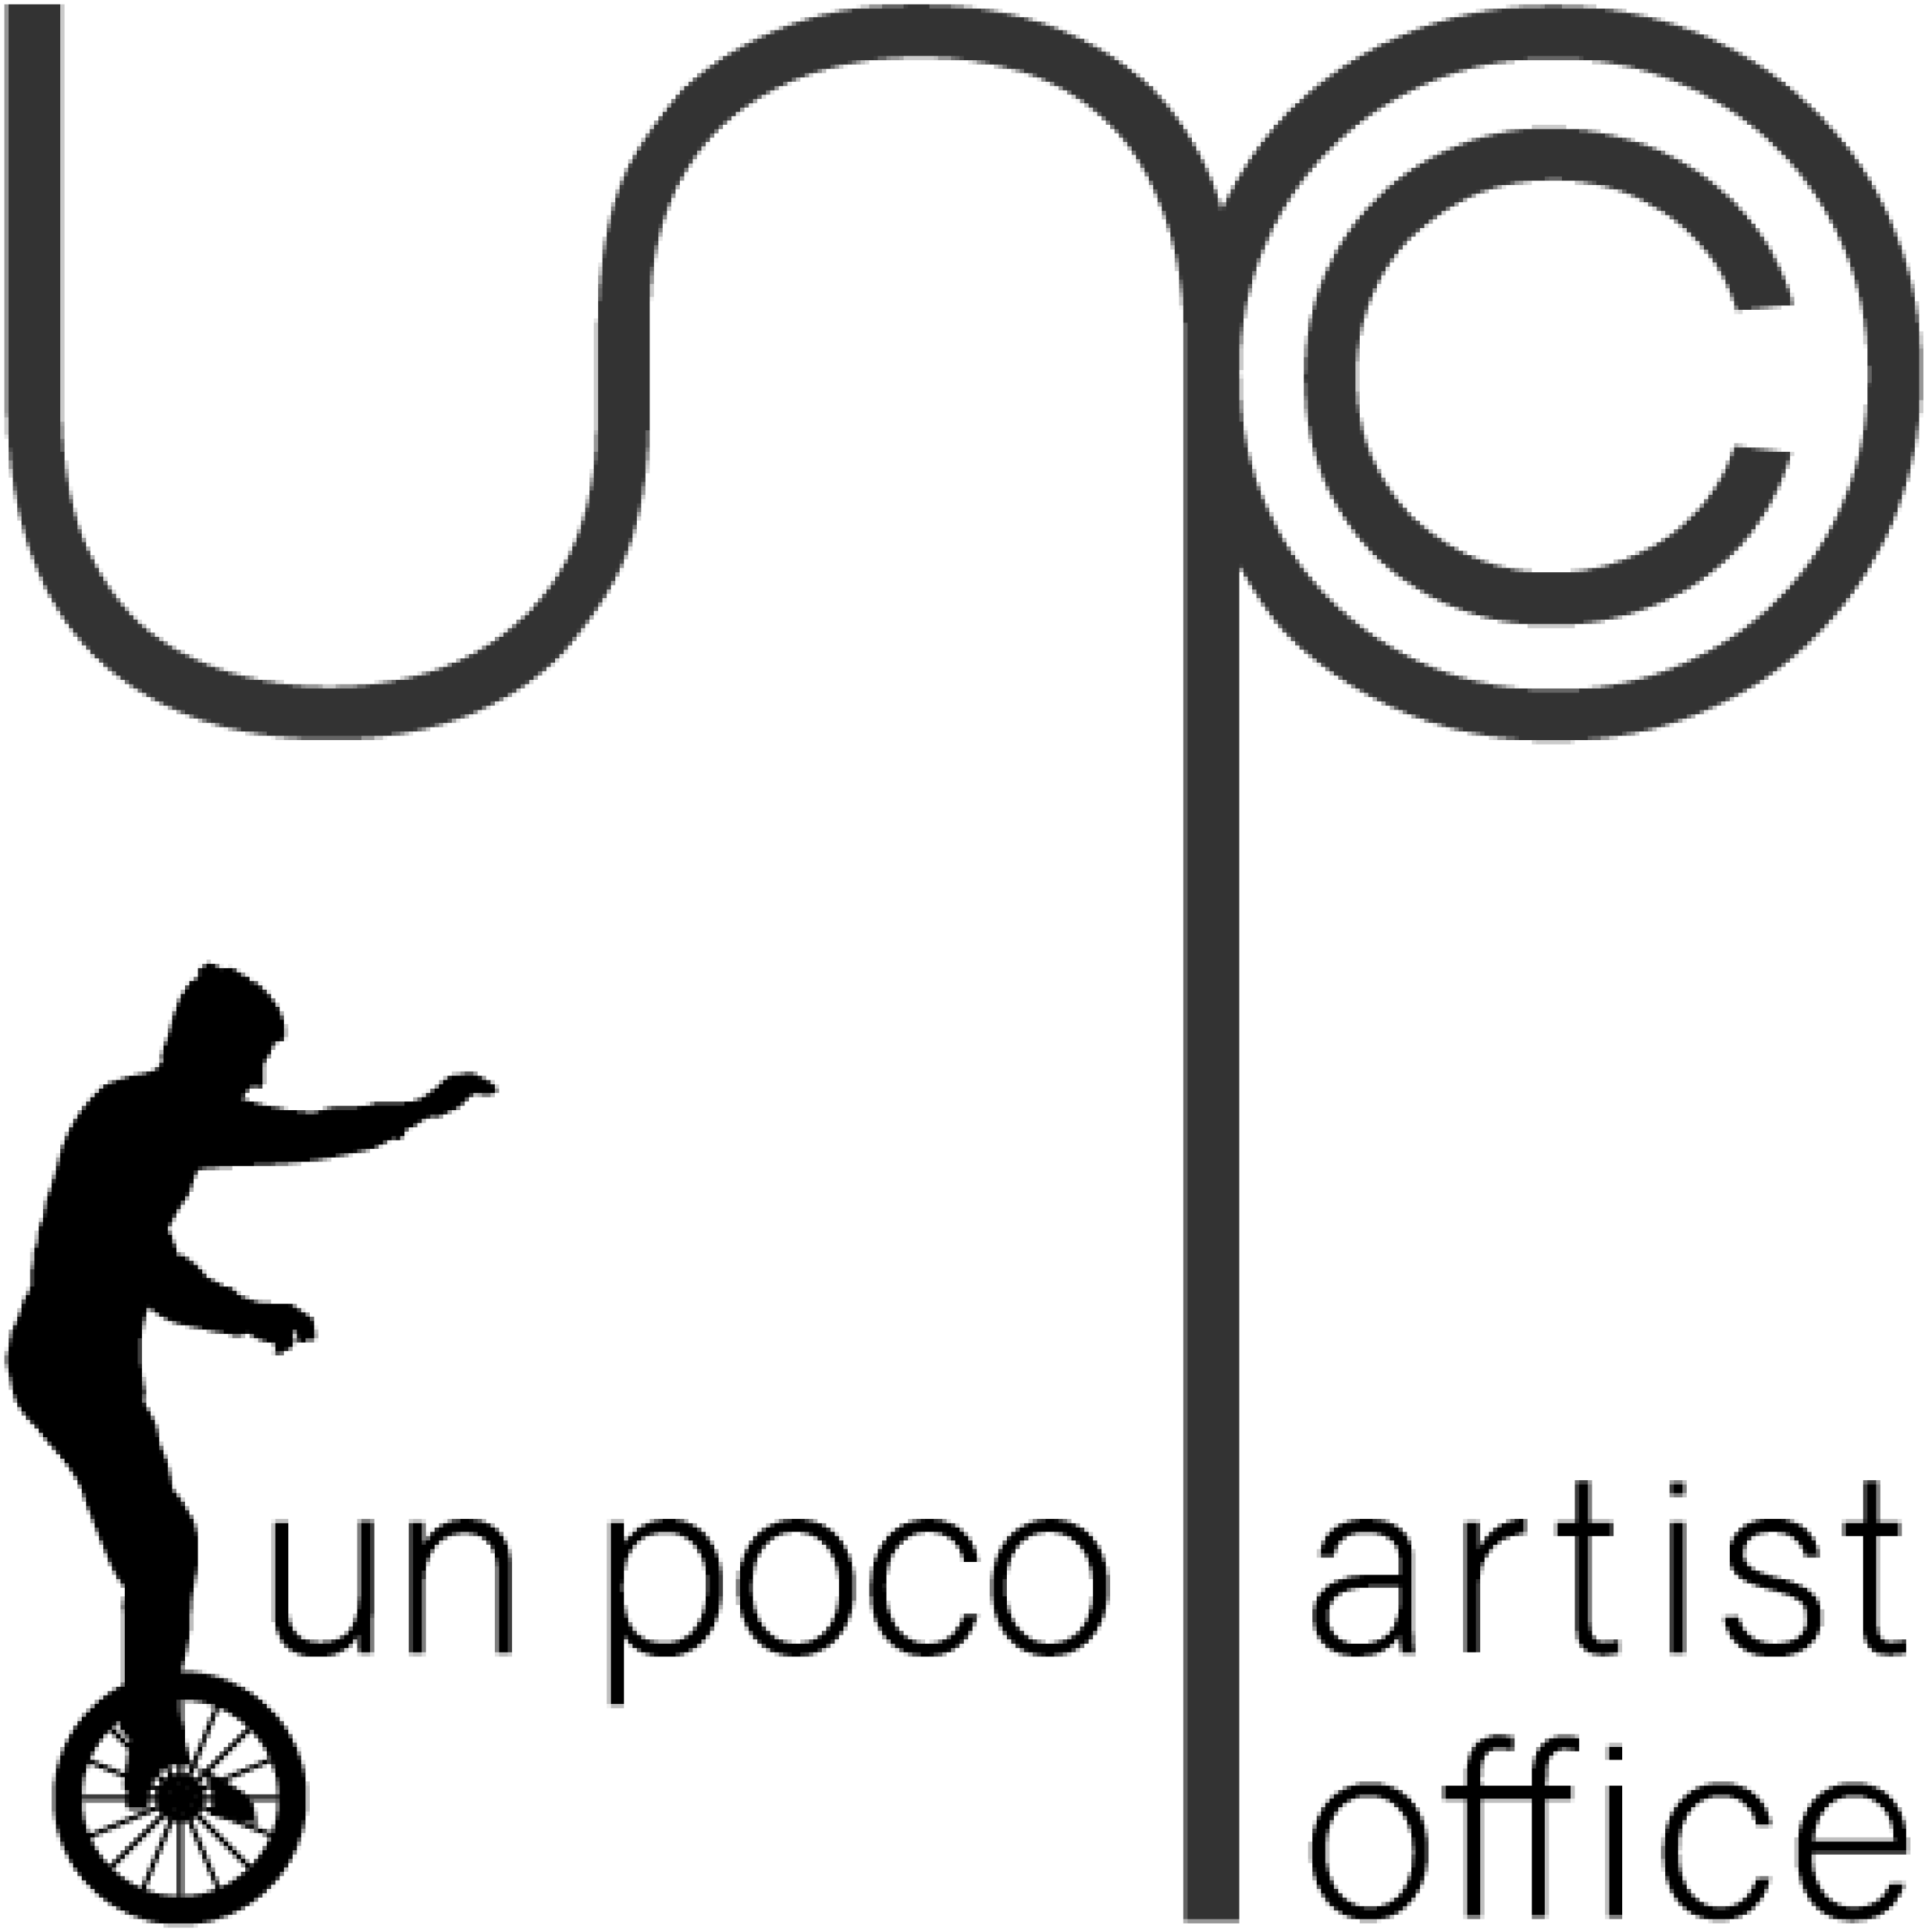 Logo UN POCO artist office